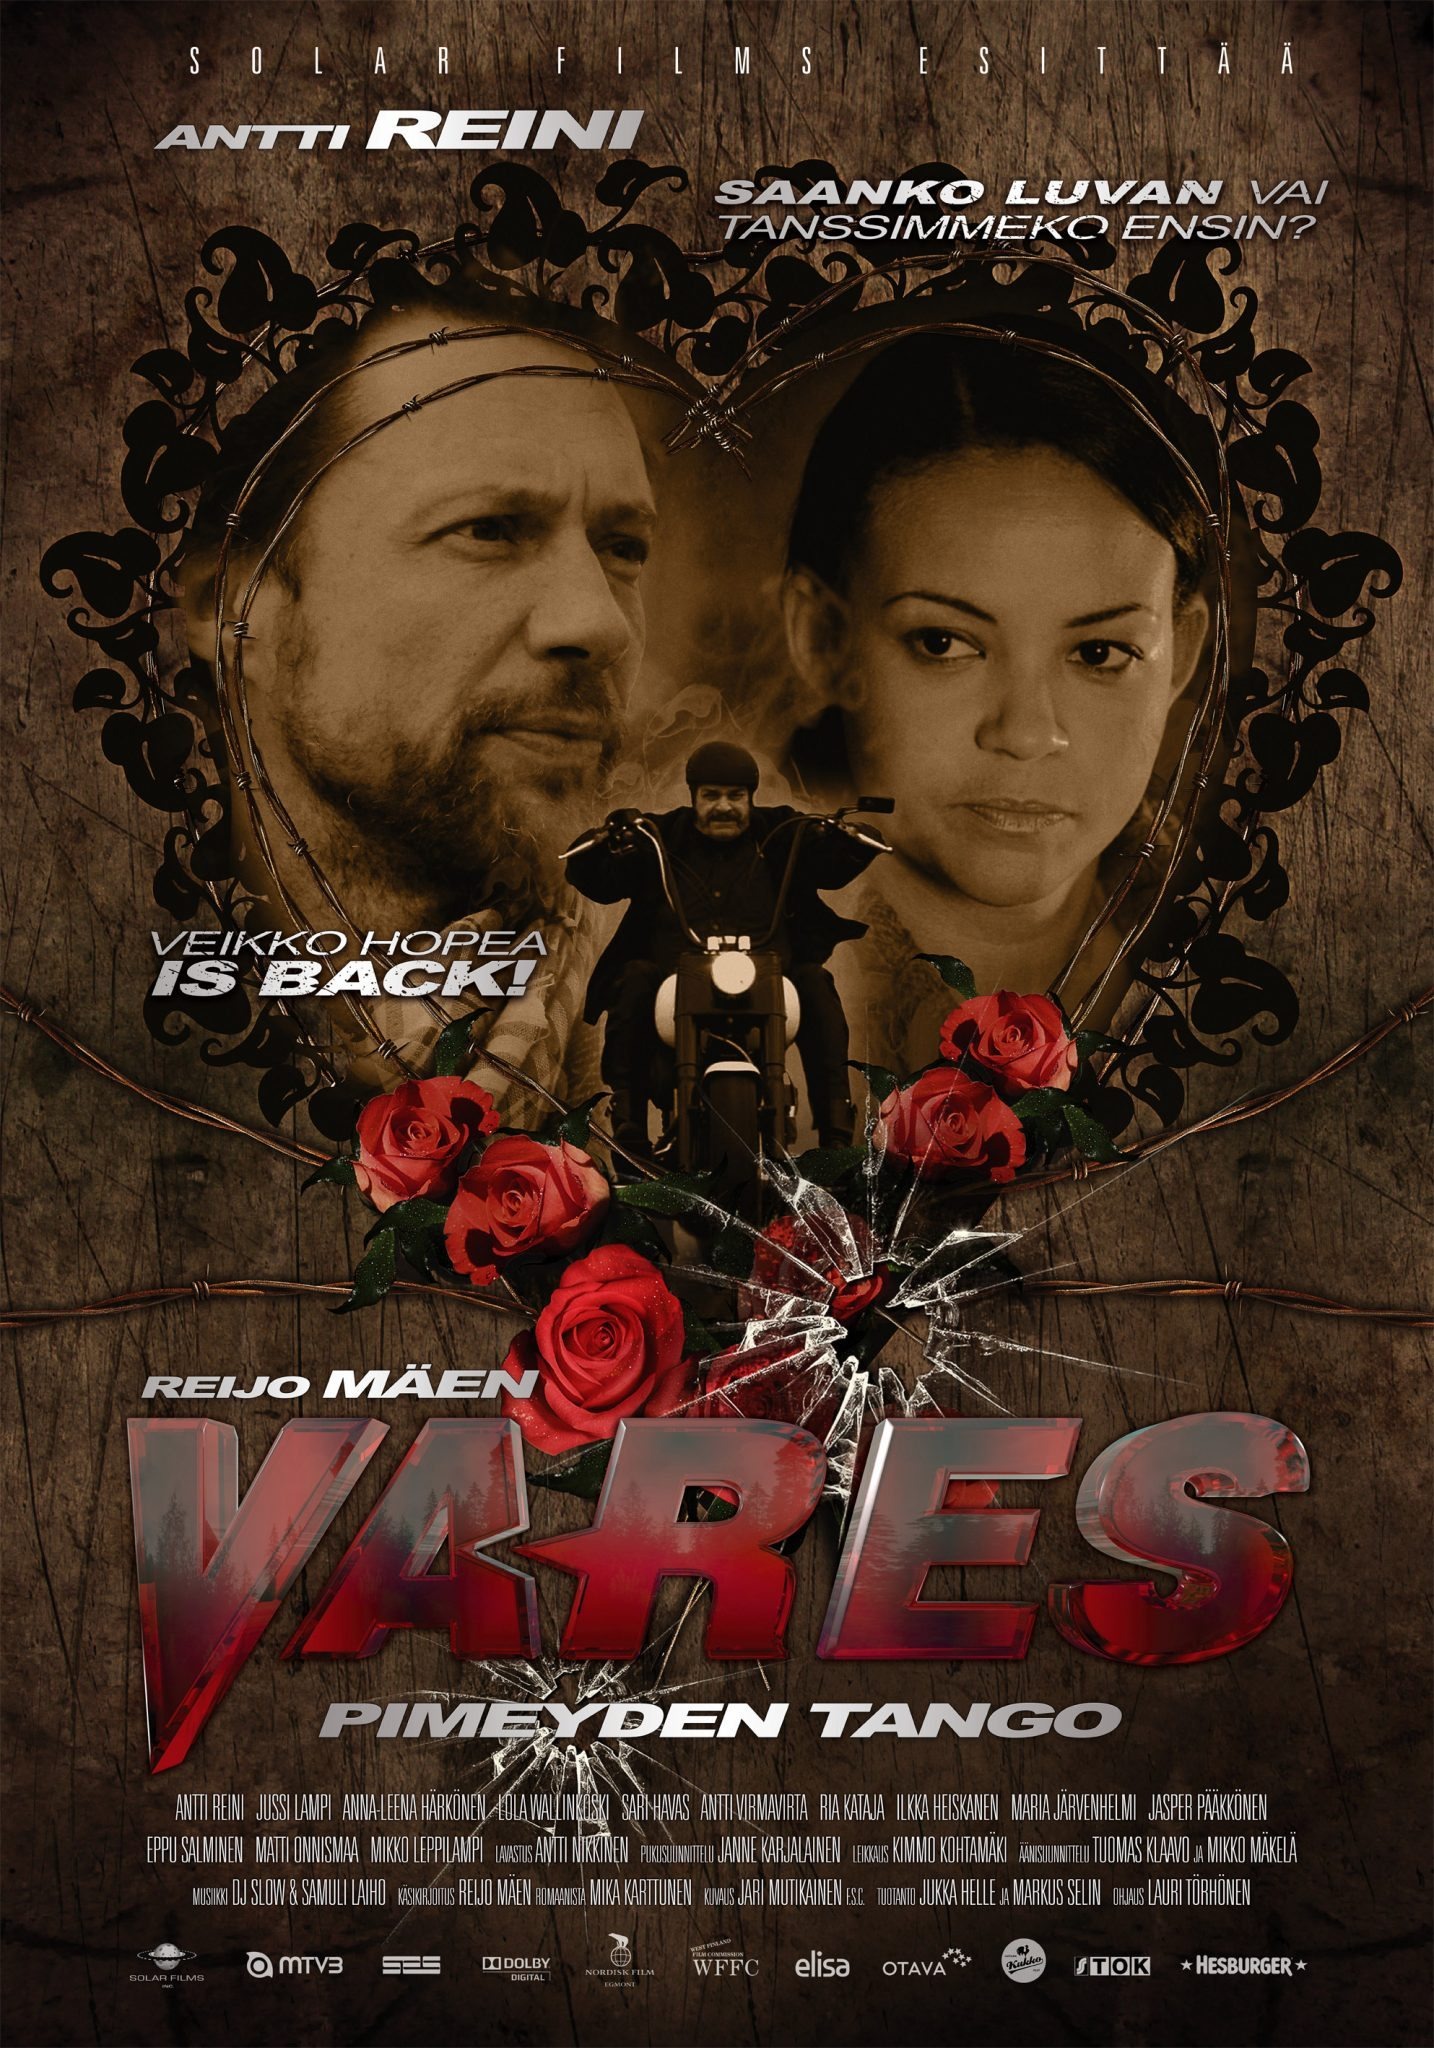 Mega Sized Movie Poster Image for Vares - Pimeyden tango 